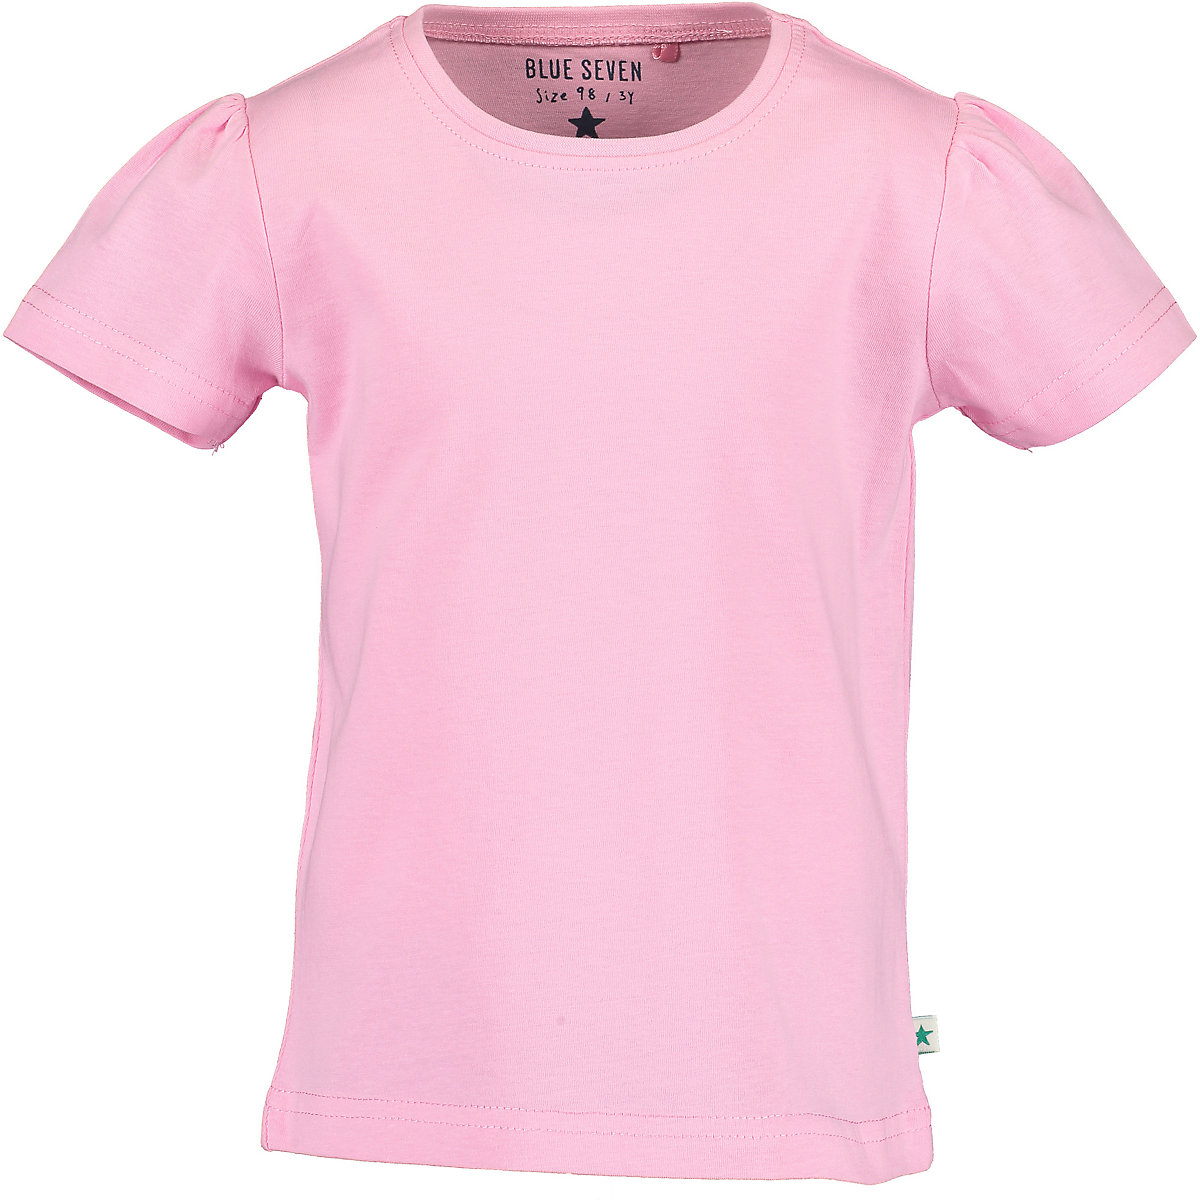 BLUE SEVEN T-Shirt für Mädchen rosa